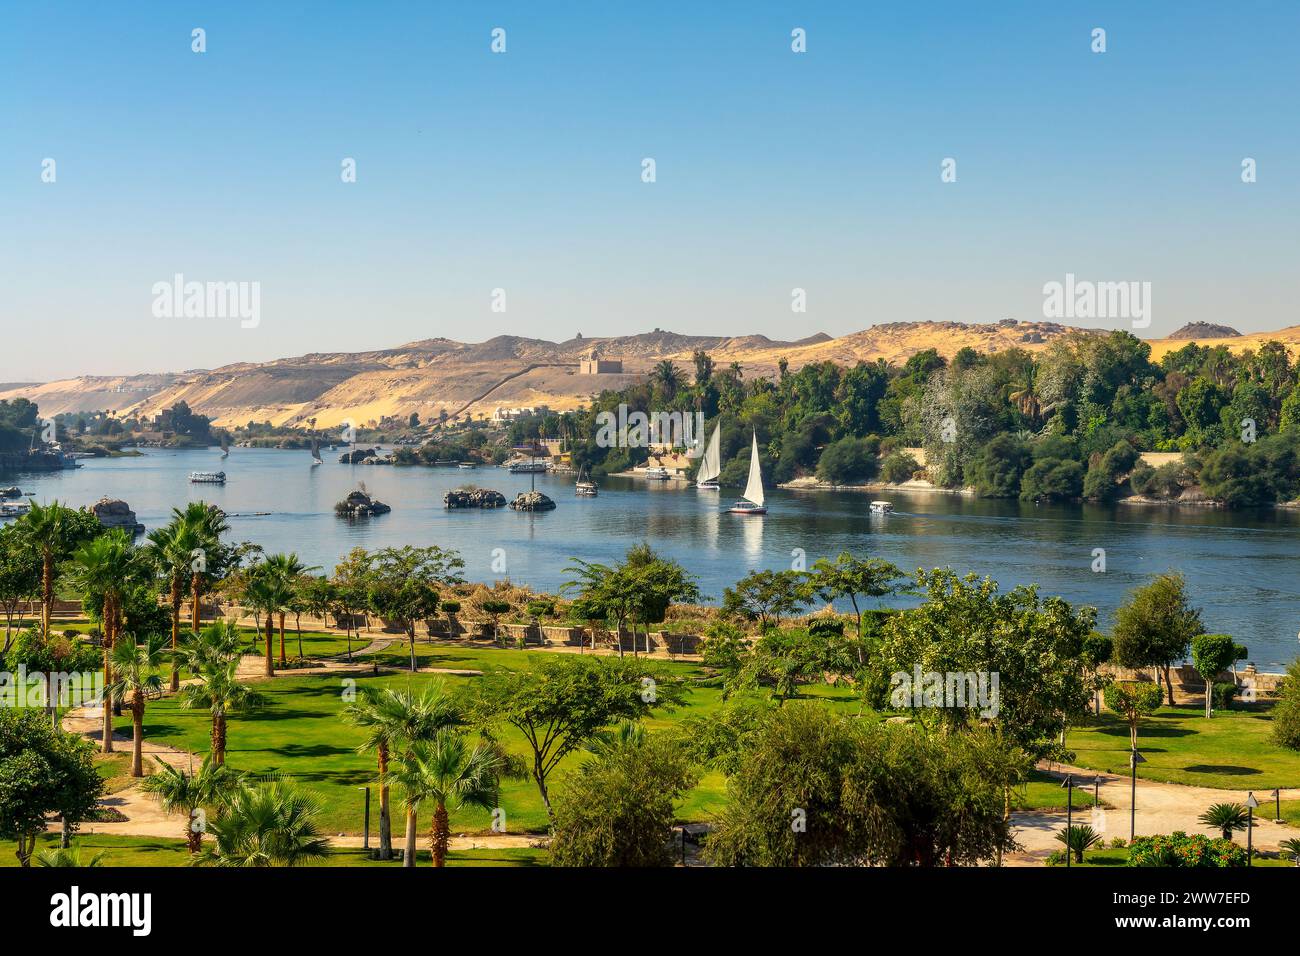 Panoramablick auf den Nil mit Feluken (traditionelle ägyptische Segelboote) in Assuan, Ägypten Stockfoto